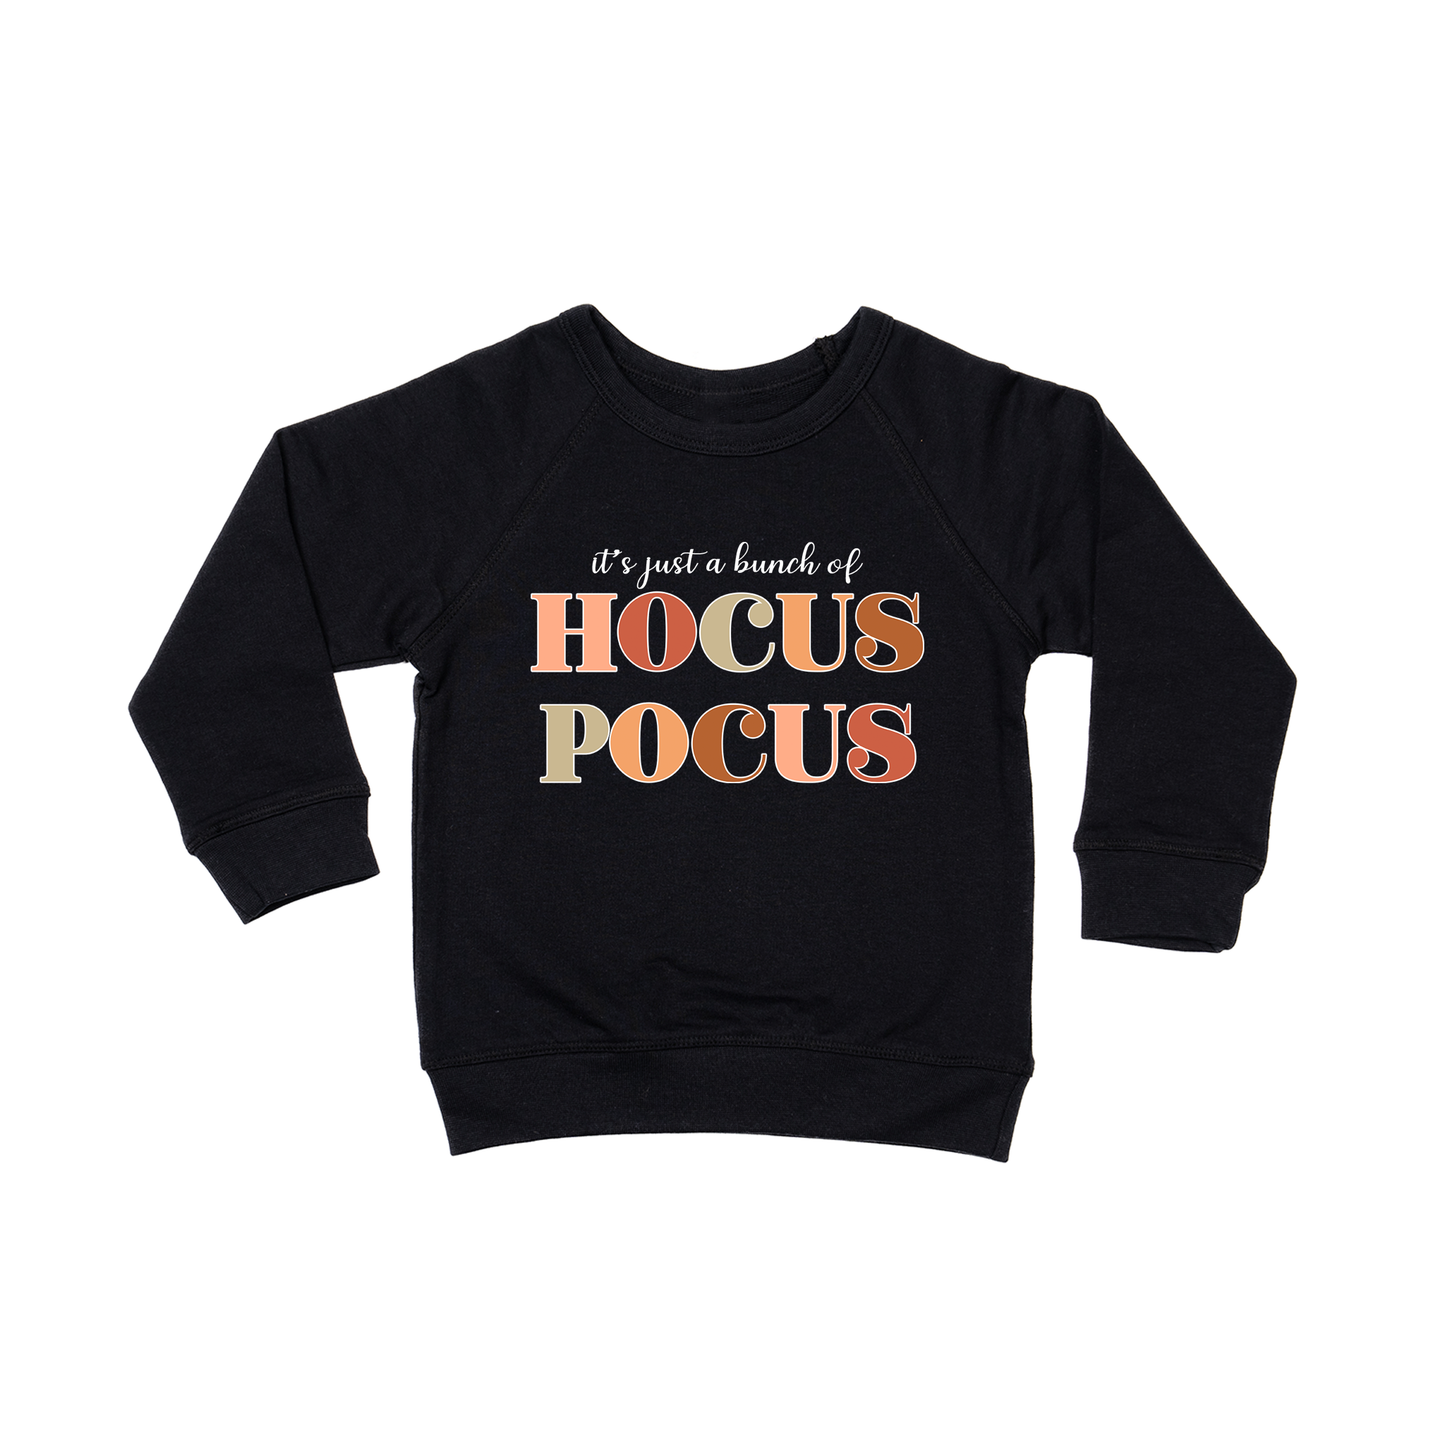 It's Just A Bunch of Hocus Pocus (White) - Kids Sweatshirt (Black)